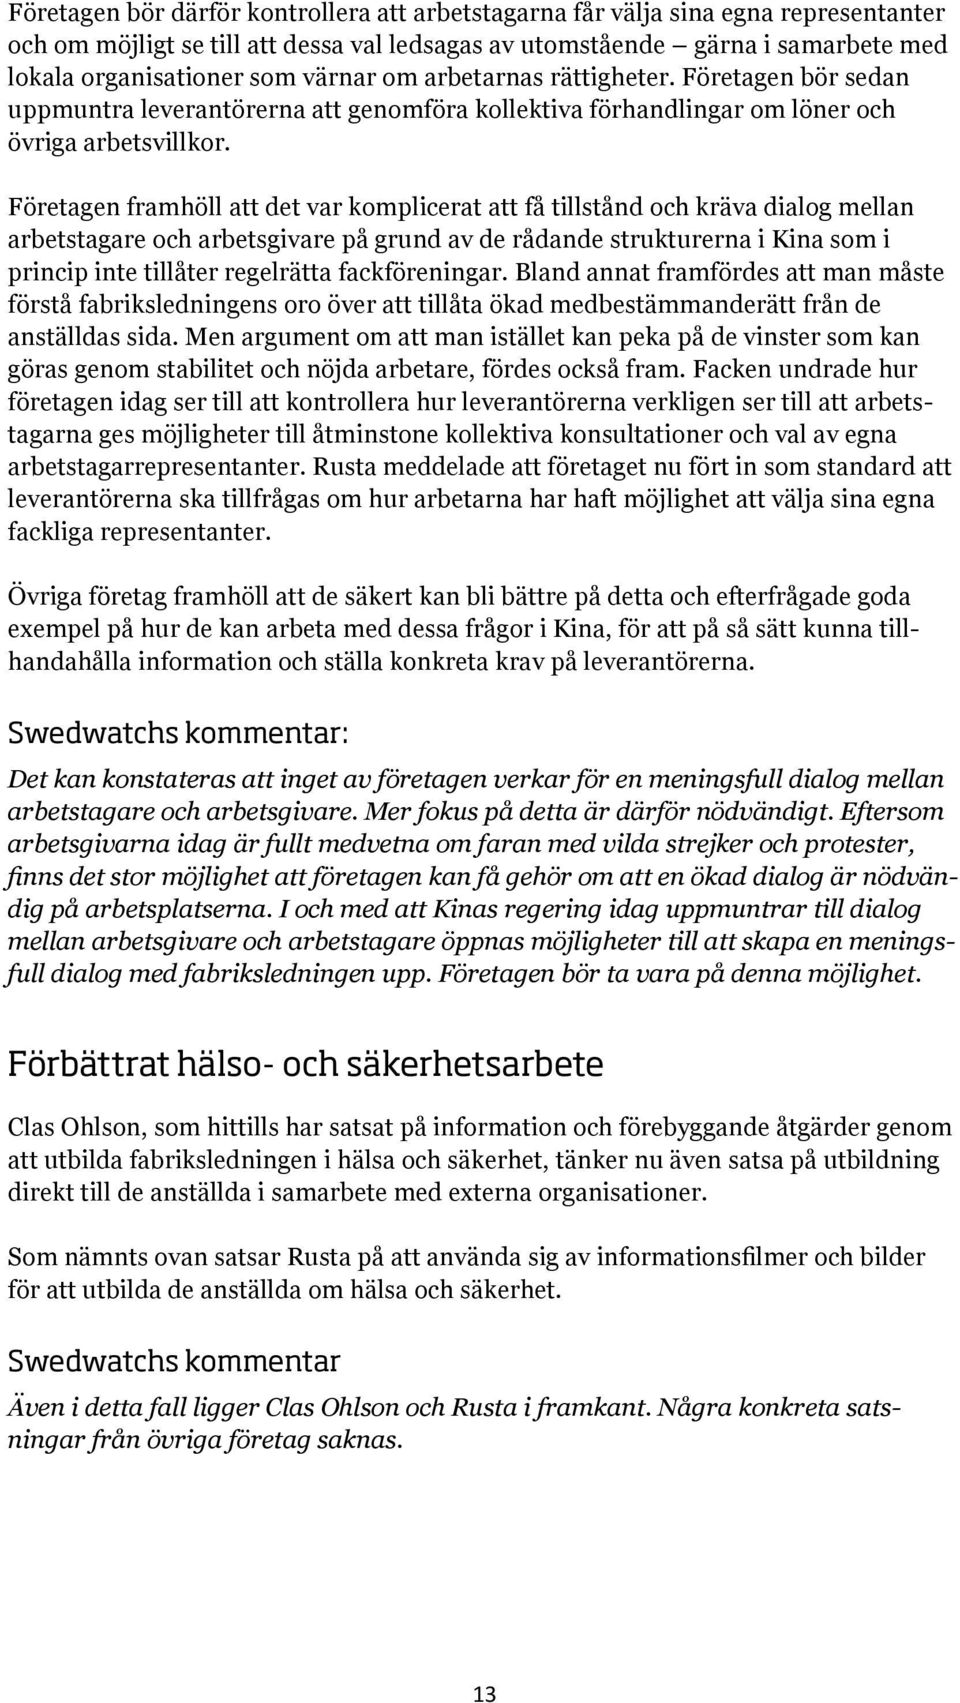 Swedwatch uppföljningsrapport #53. Rundabordssamtal med ...